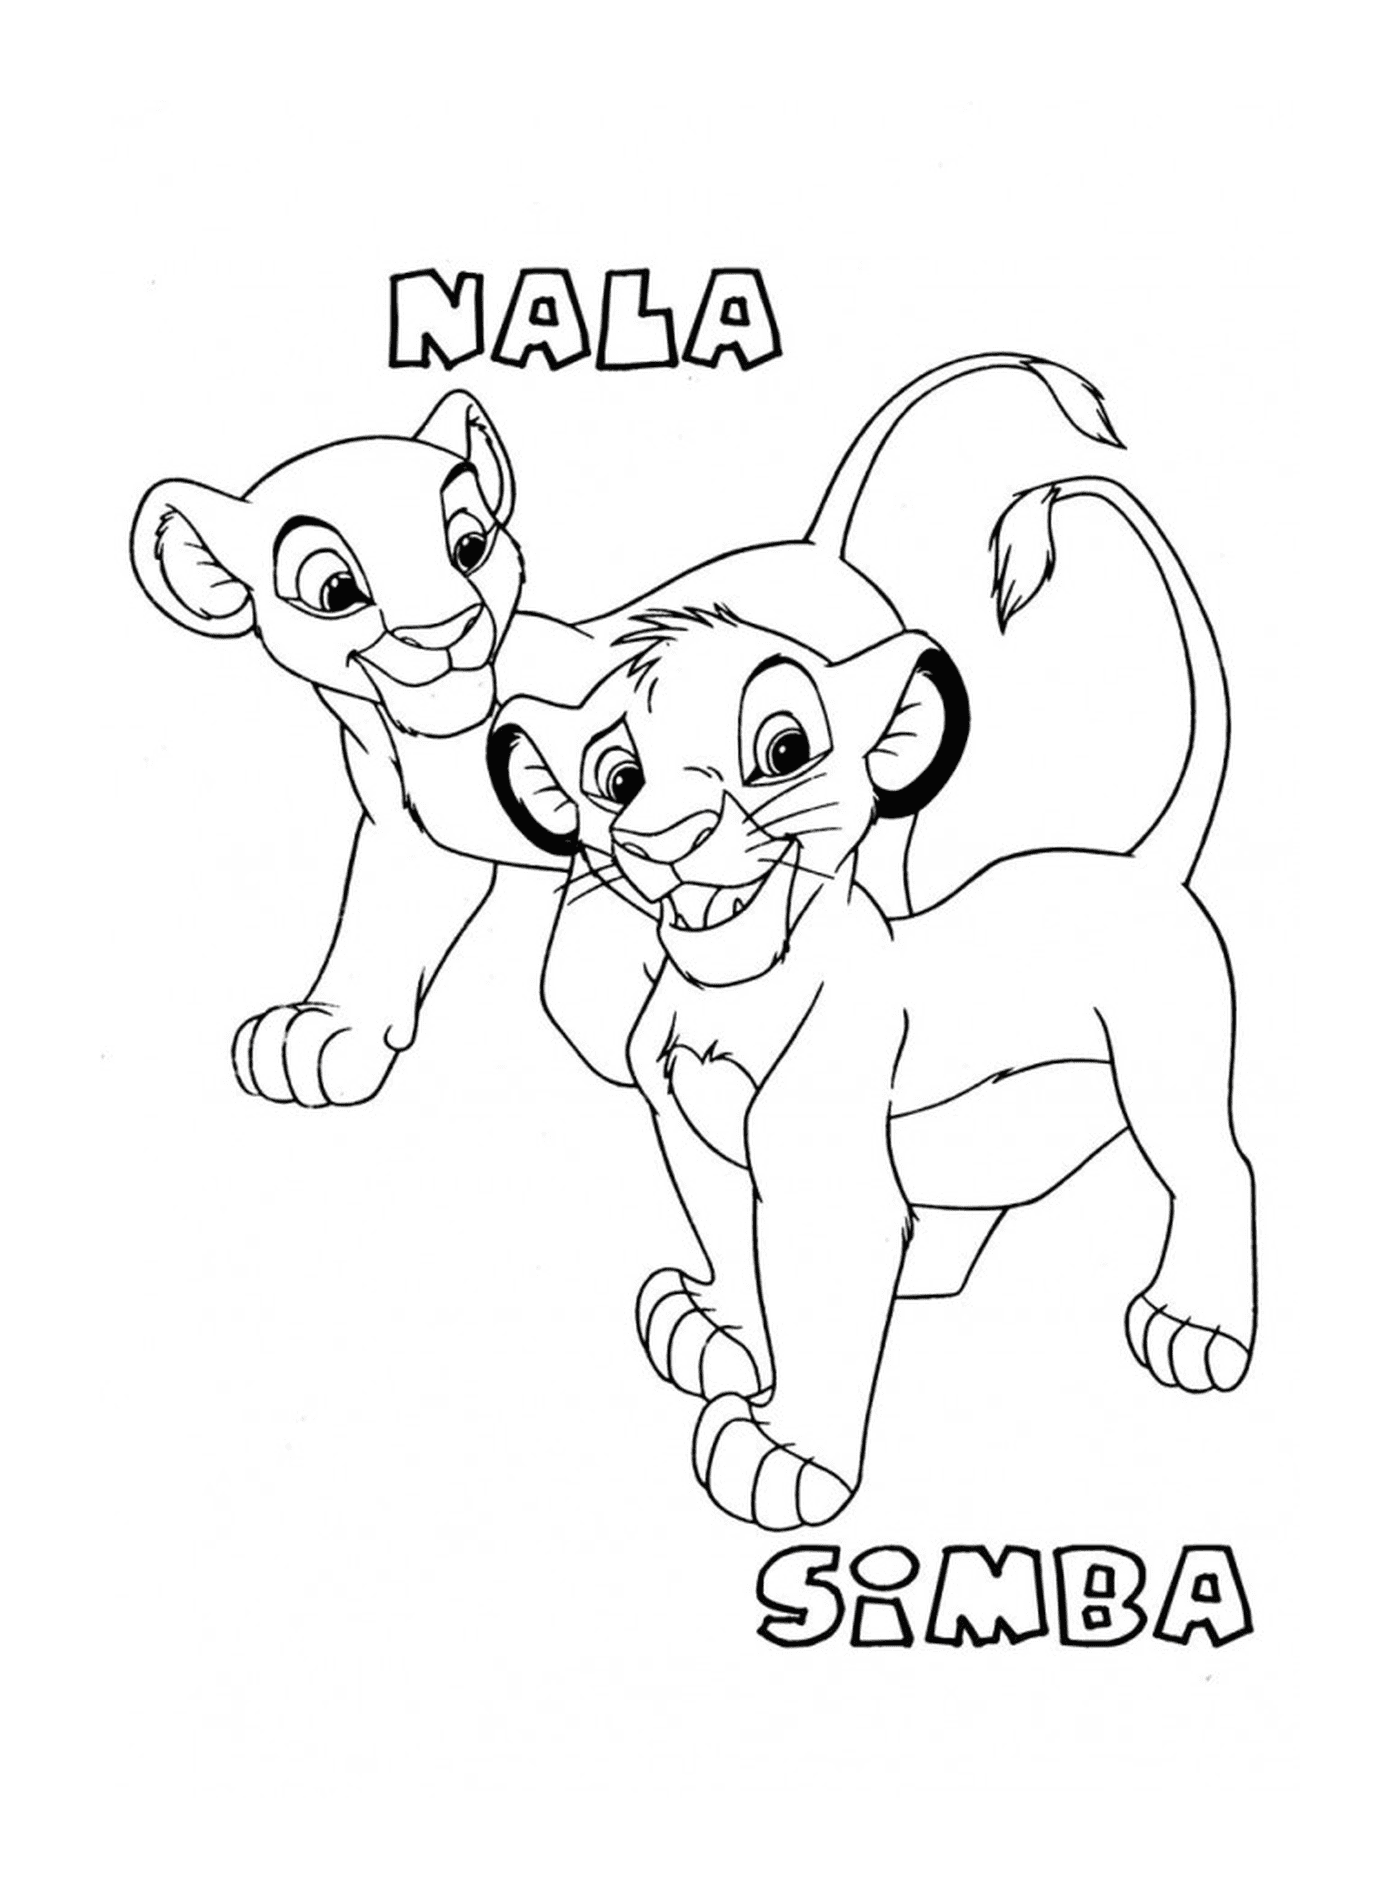  Simba and Nala babies in The Lion King 